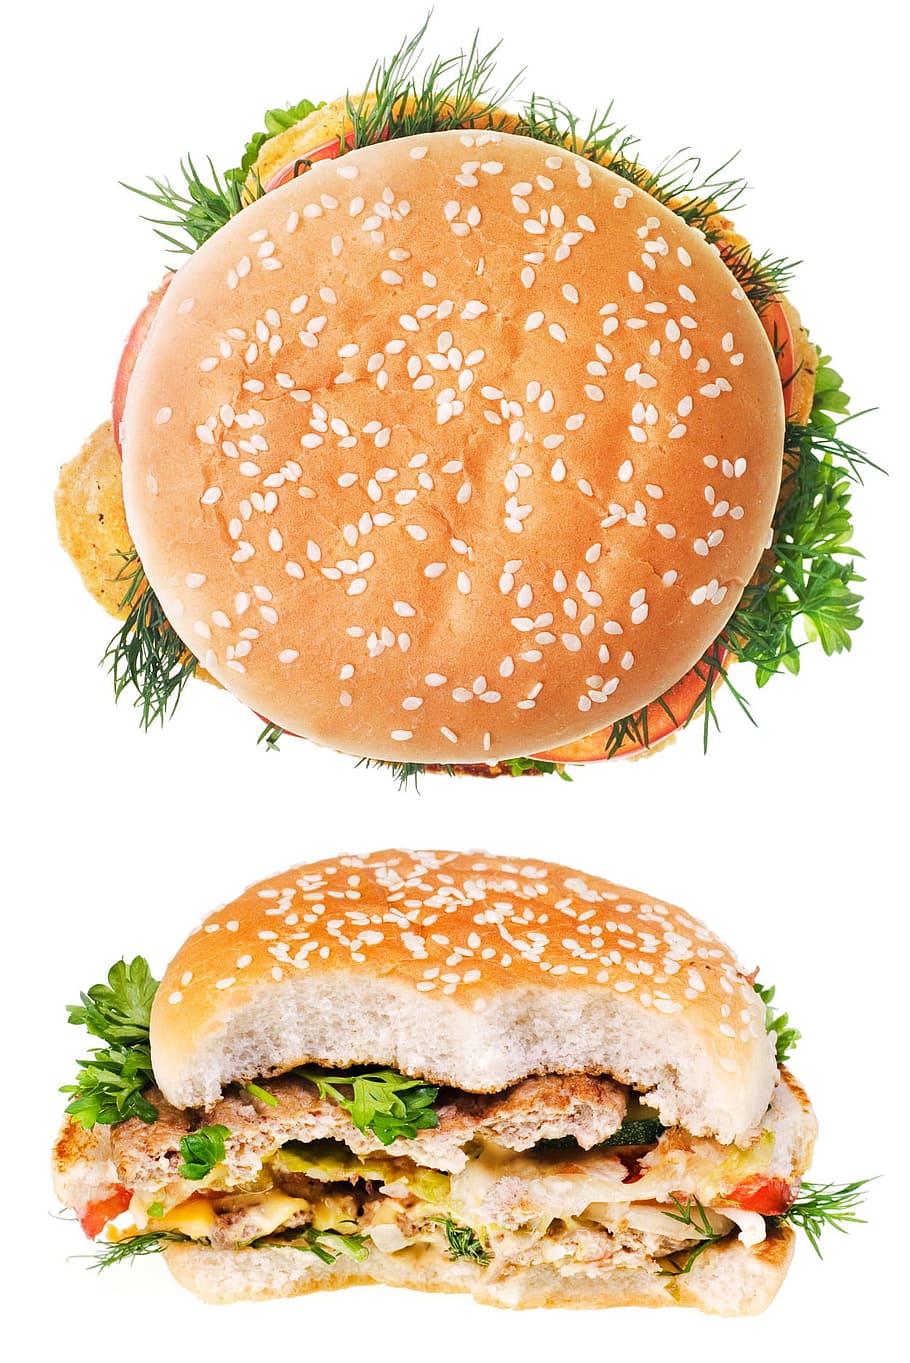 Sandwich, bite, hamburger, burger, food, fast, salad, diet, grilled, meal